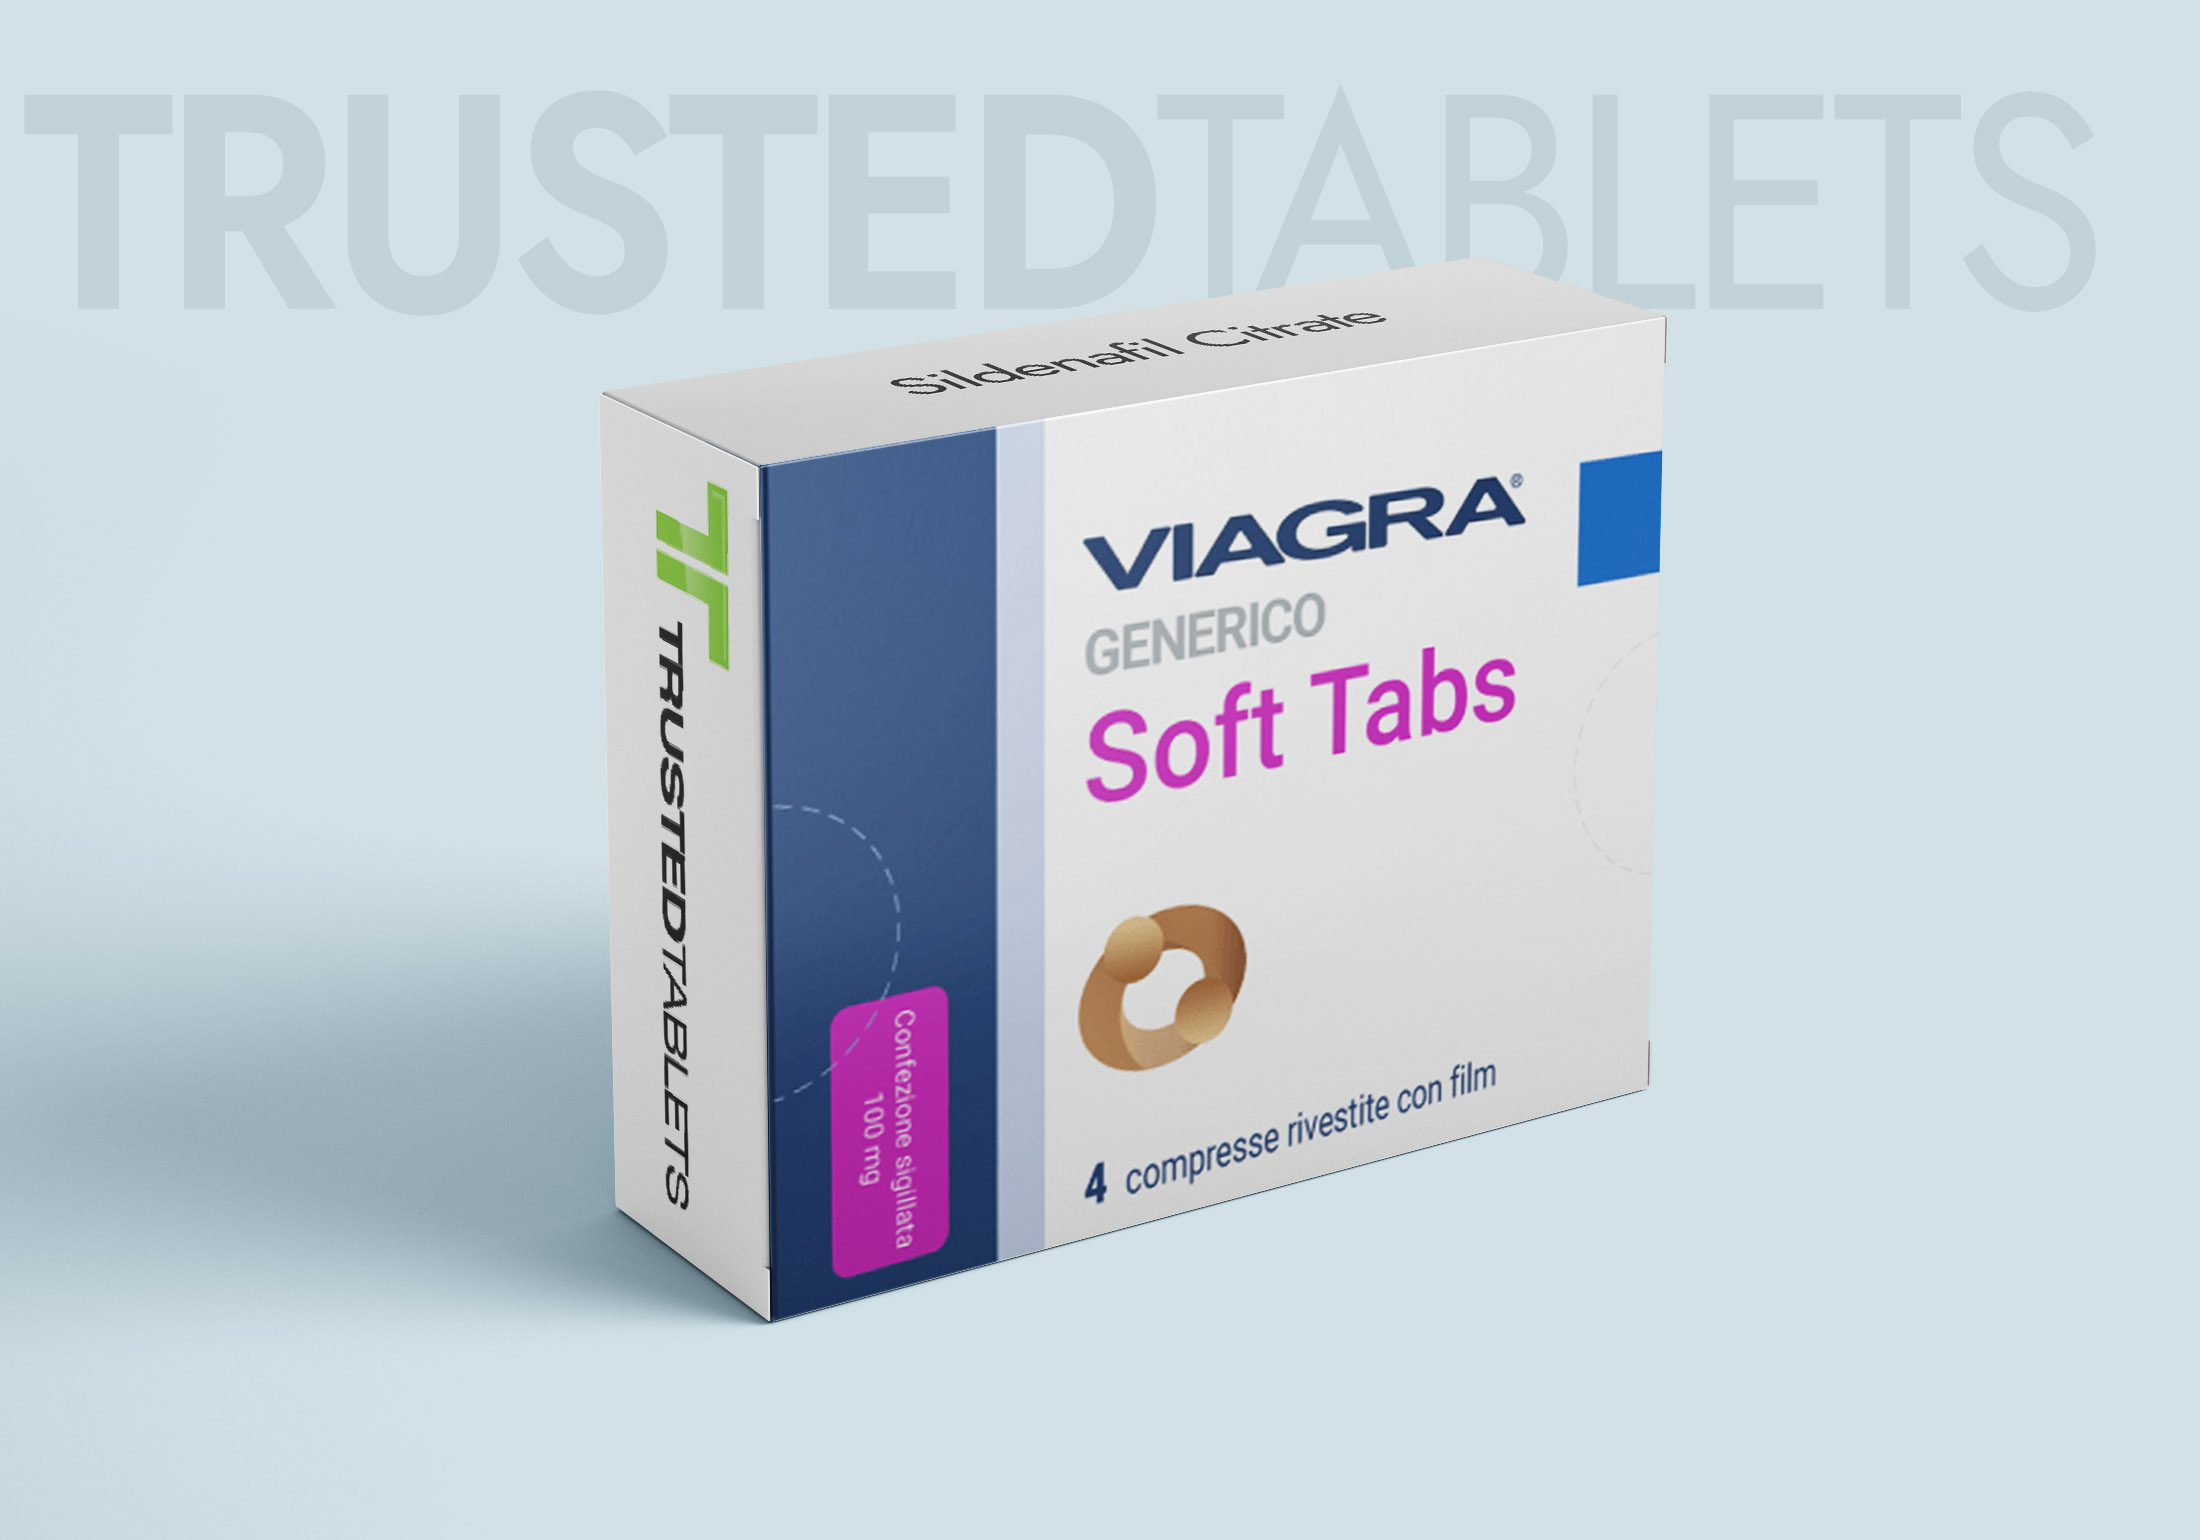 Viagra Soft TrustedTablets